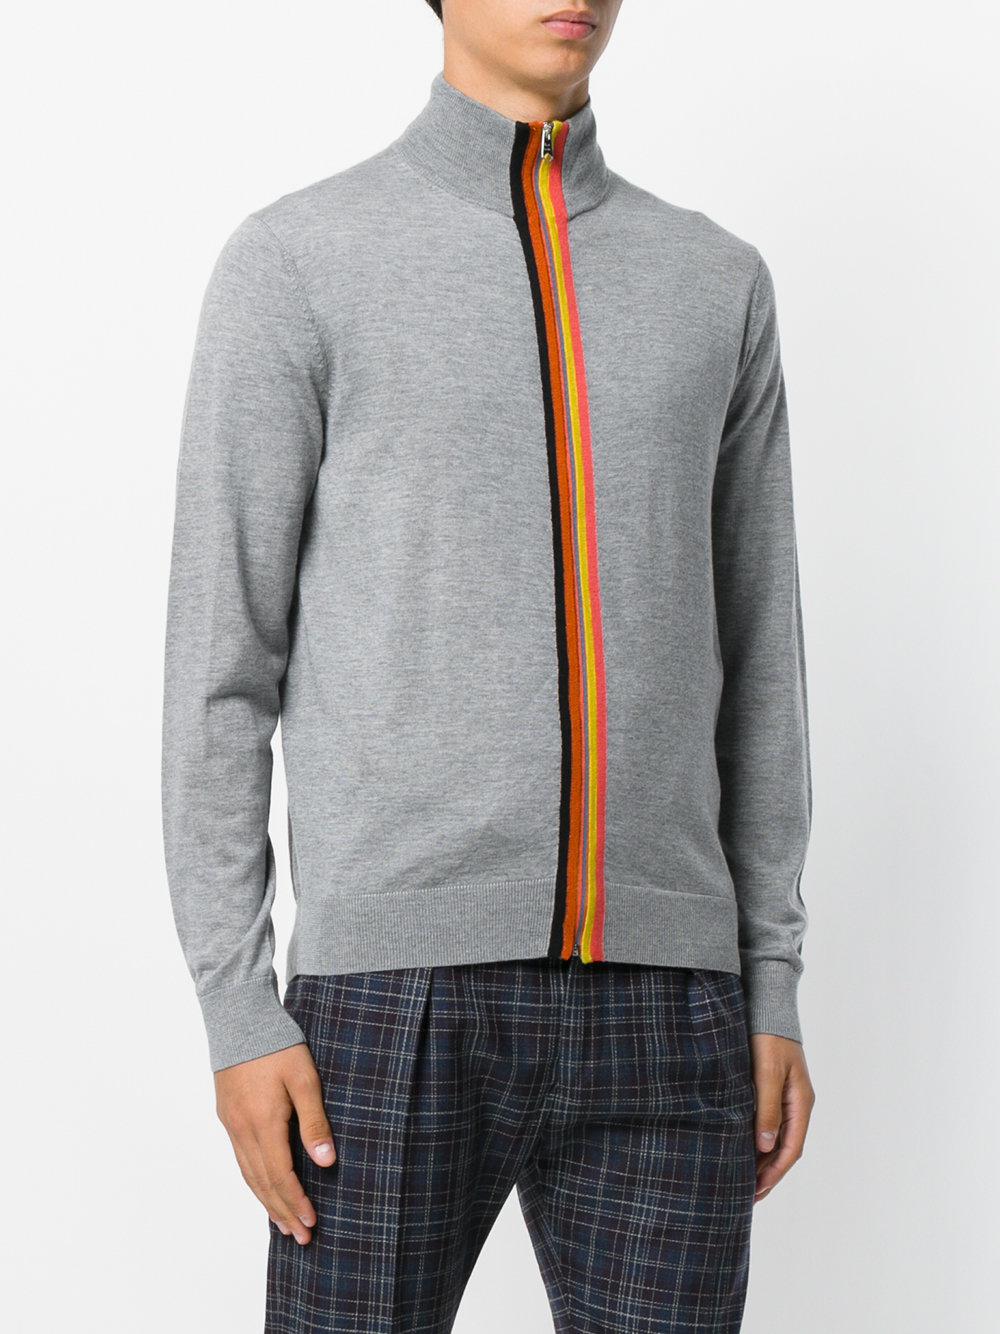 Lyst - Paul Smith Rainbow Trim Zip Front Sweater in Gray for Men